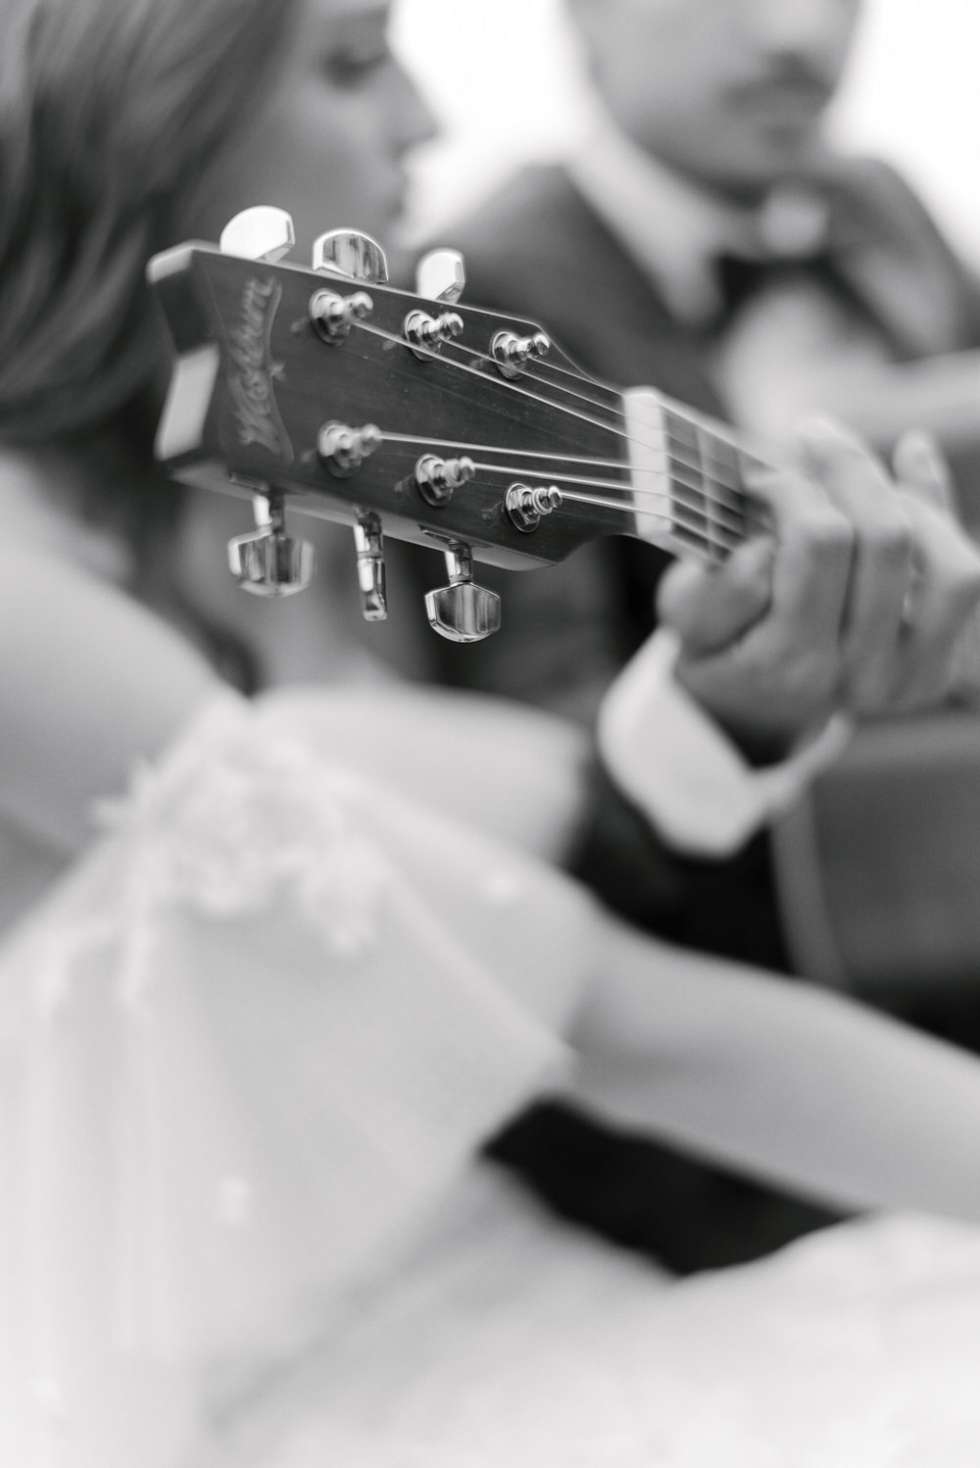 Romance Isn't Dead: A Romantic Wedding Theme Photoshoot